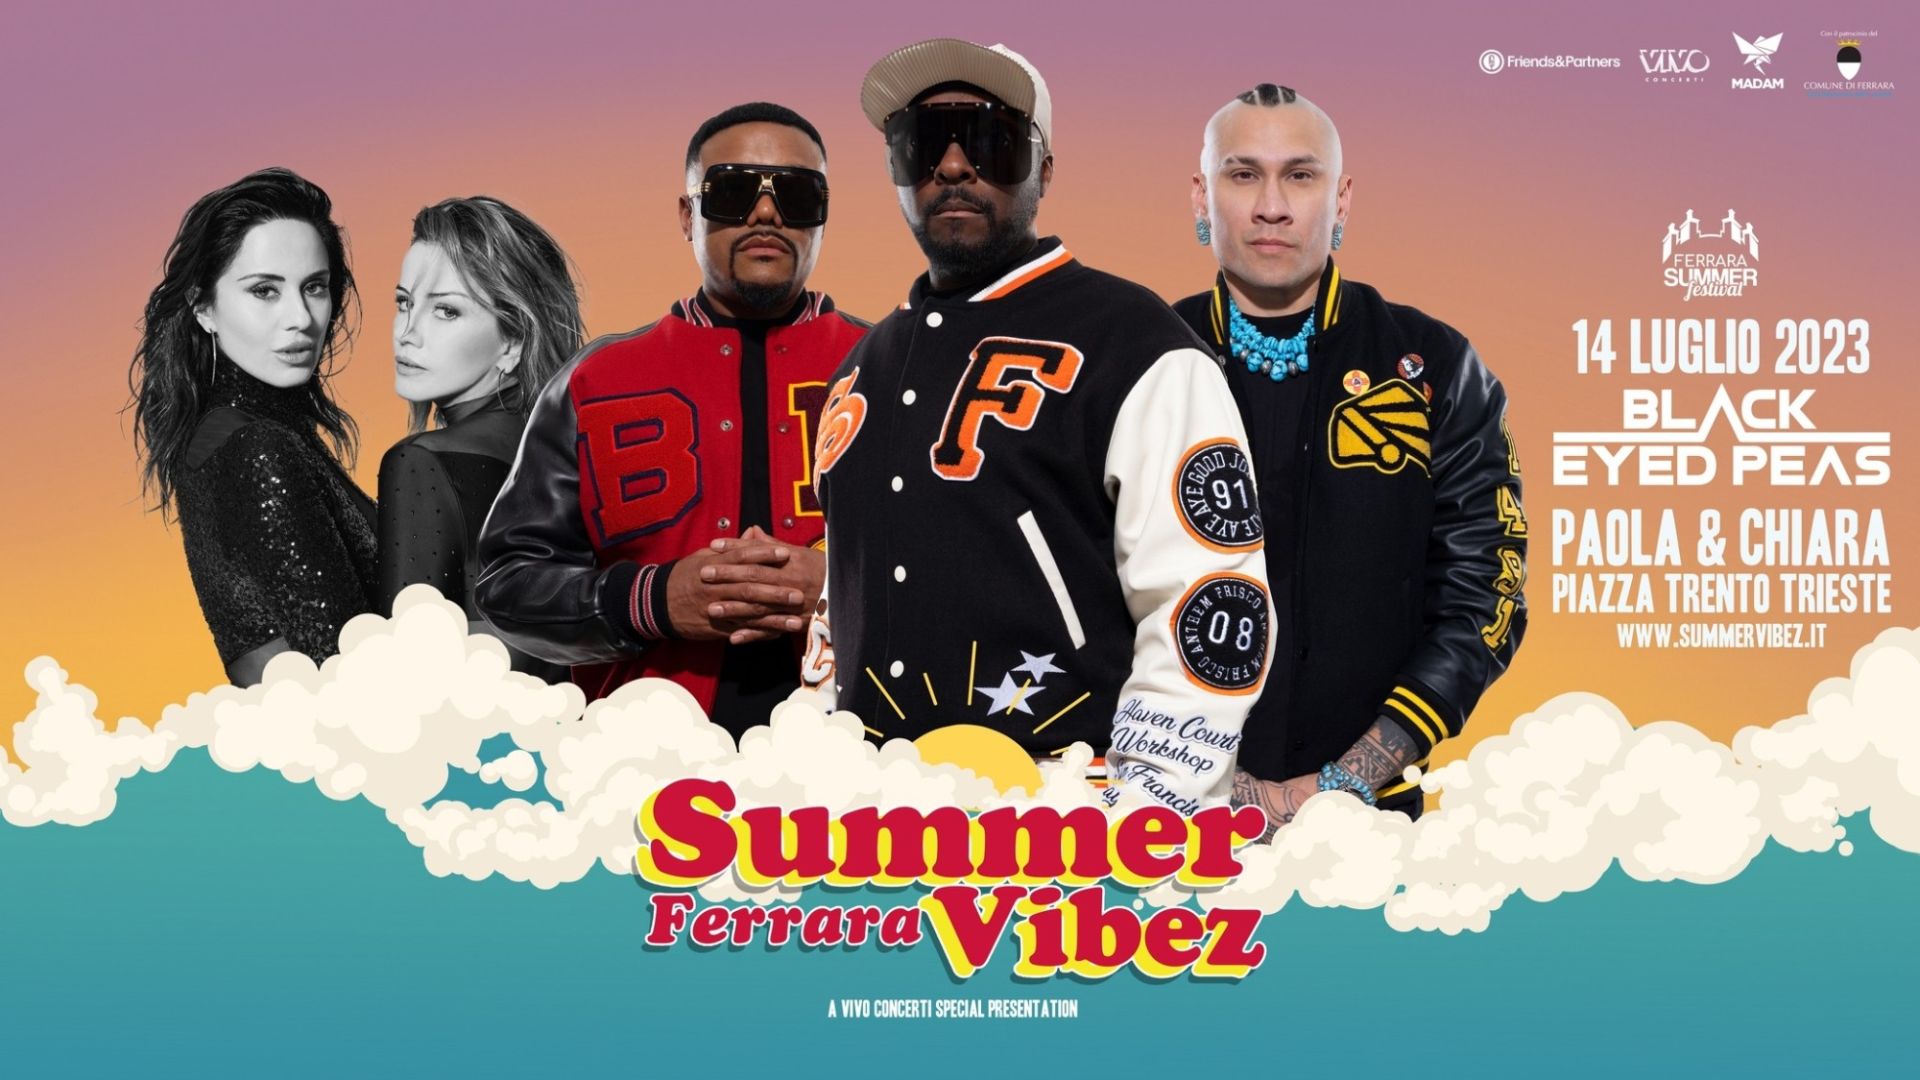 Black Eyed Peas + Paola & Chiara  - Summer Vibez Festival